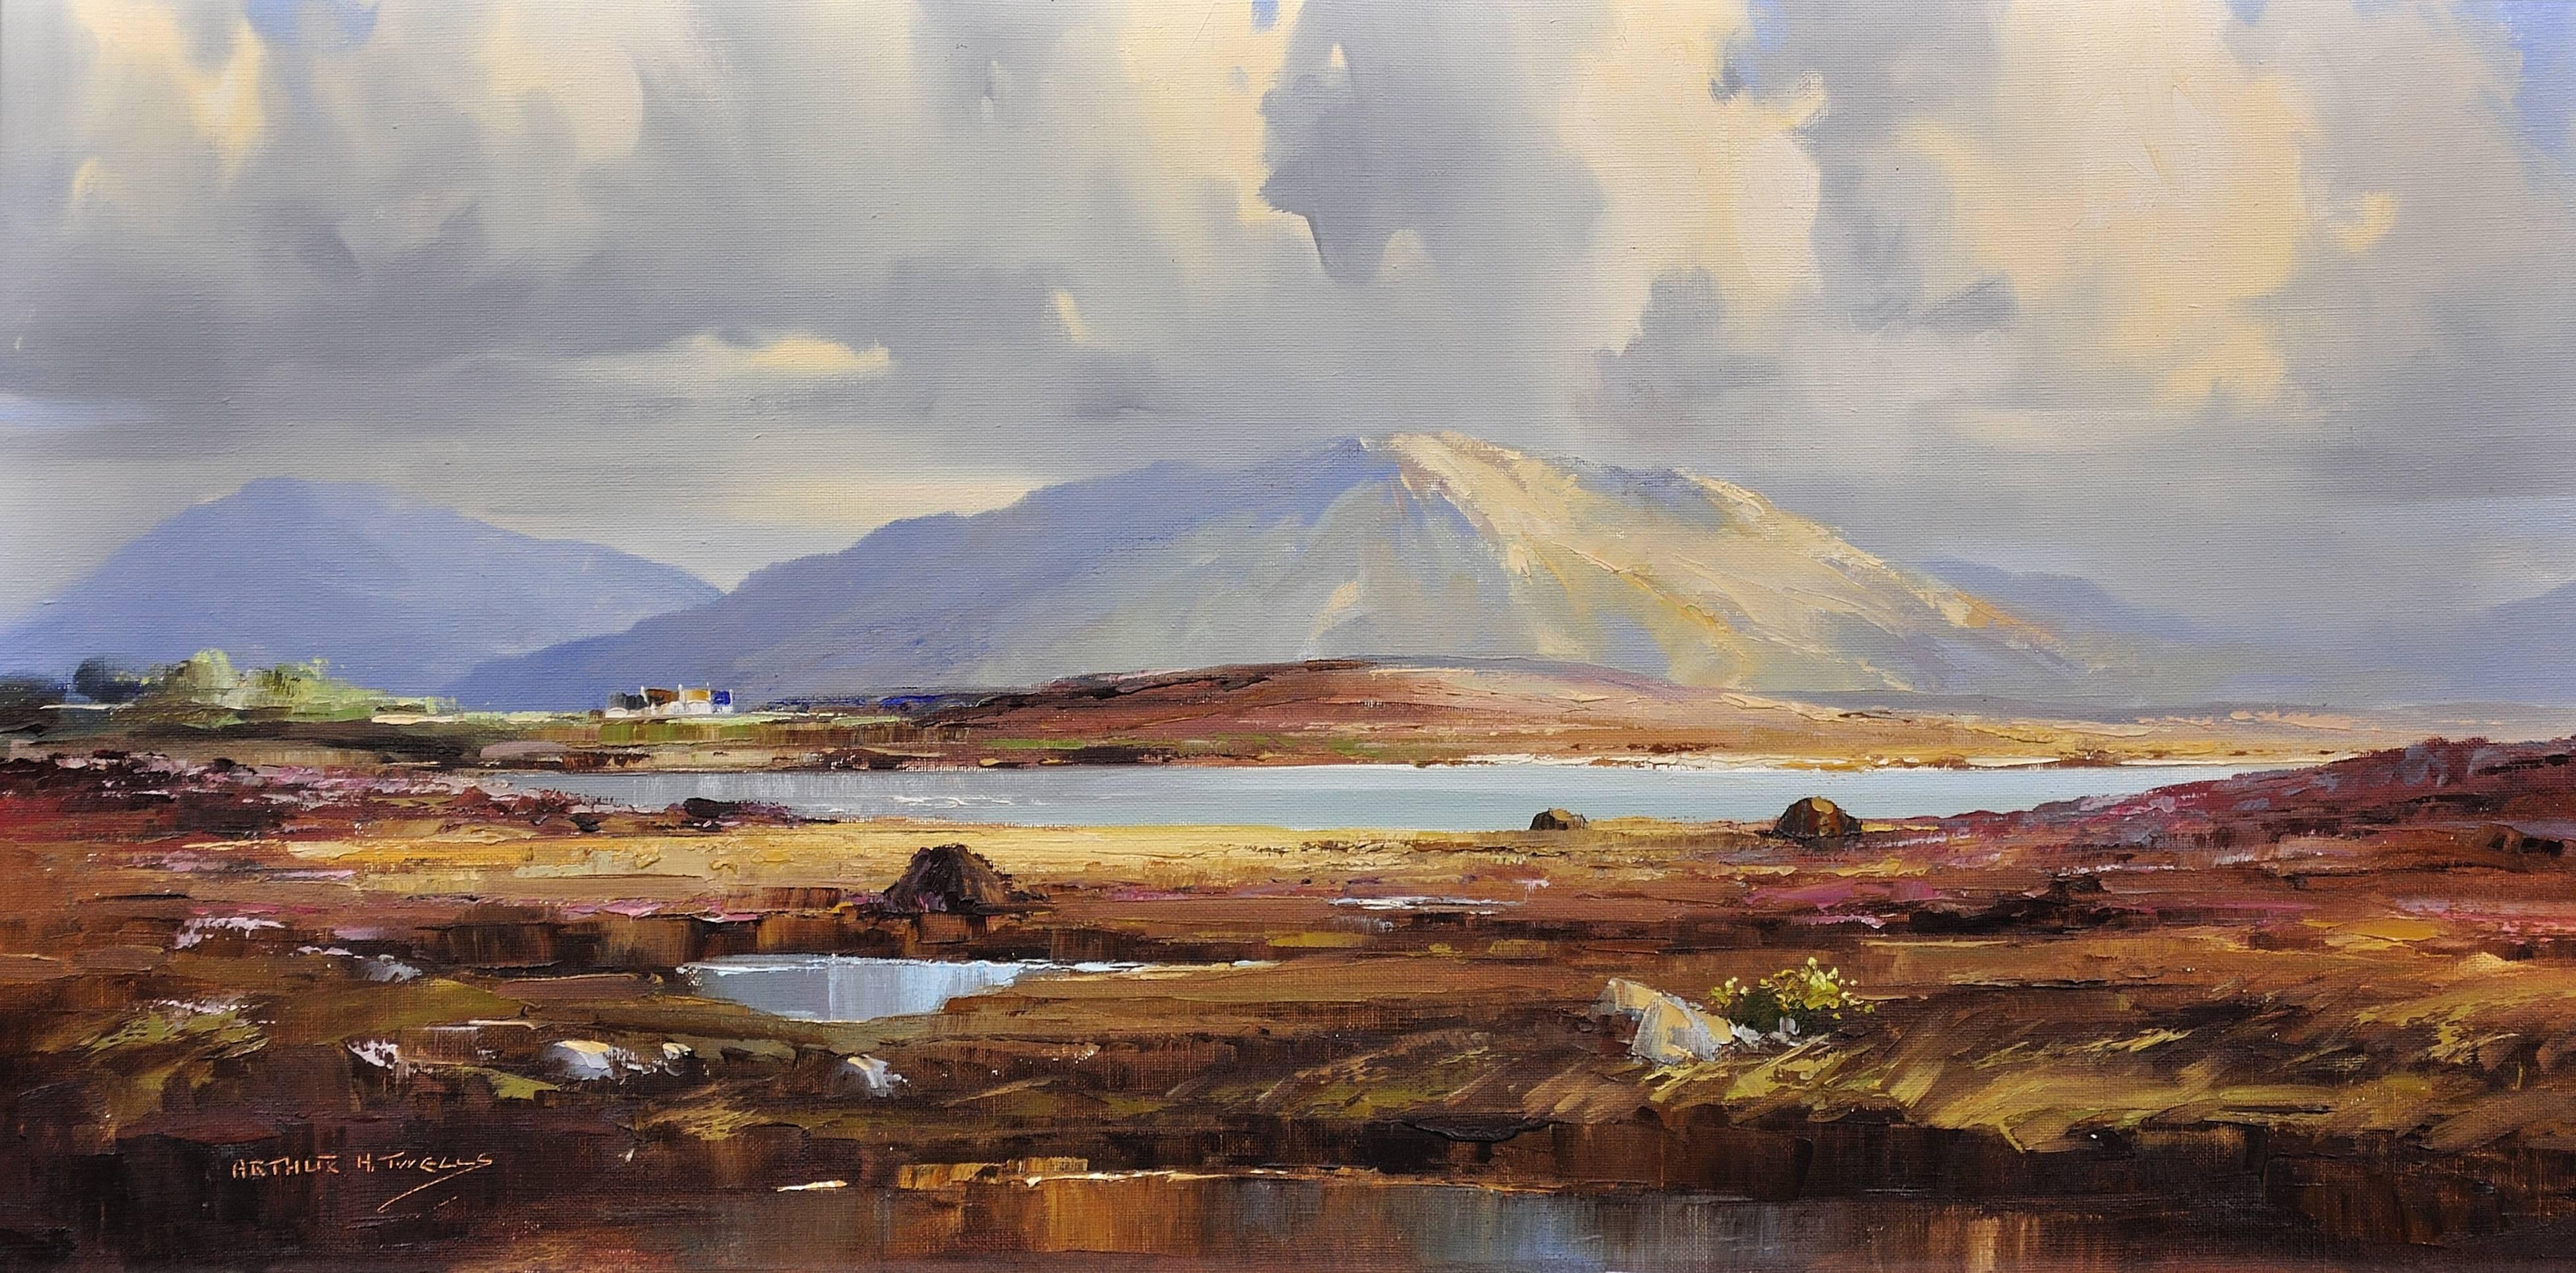 Connemara - Painting by Arthur H. Twells